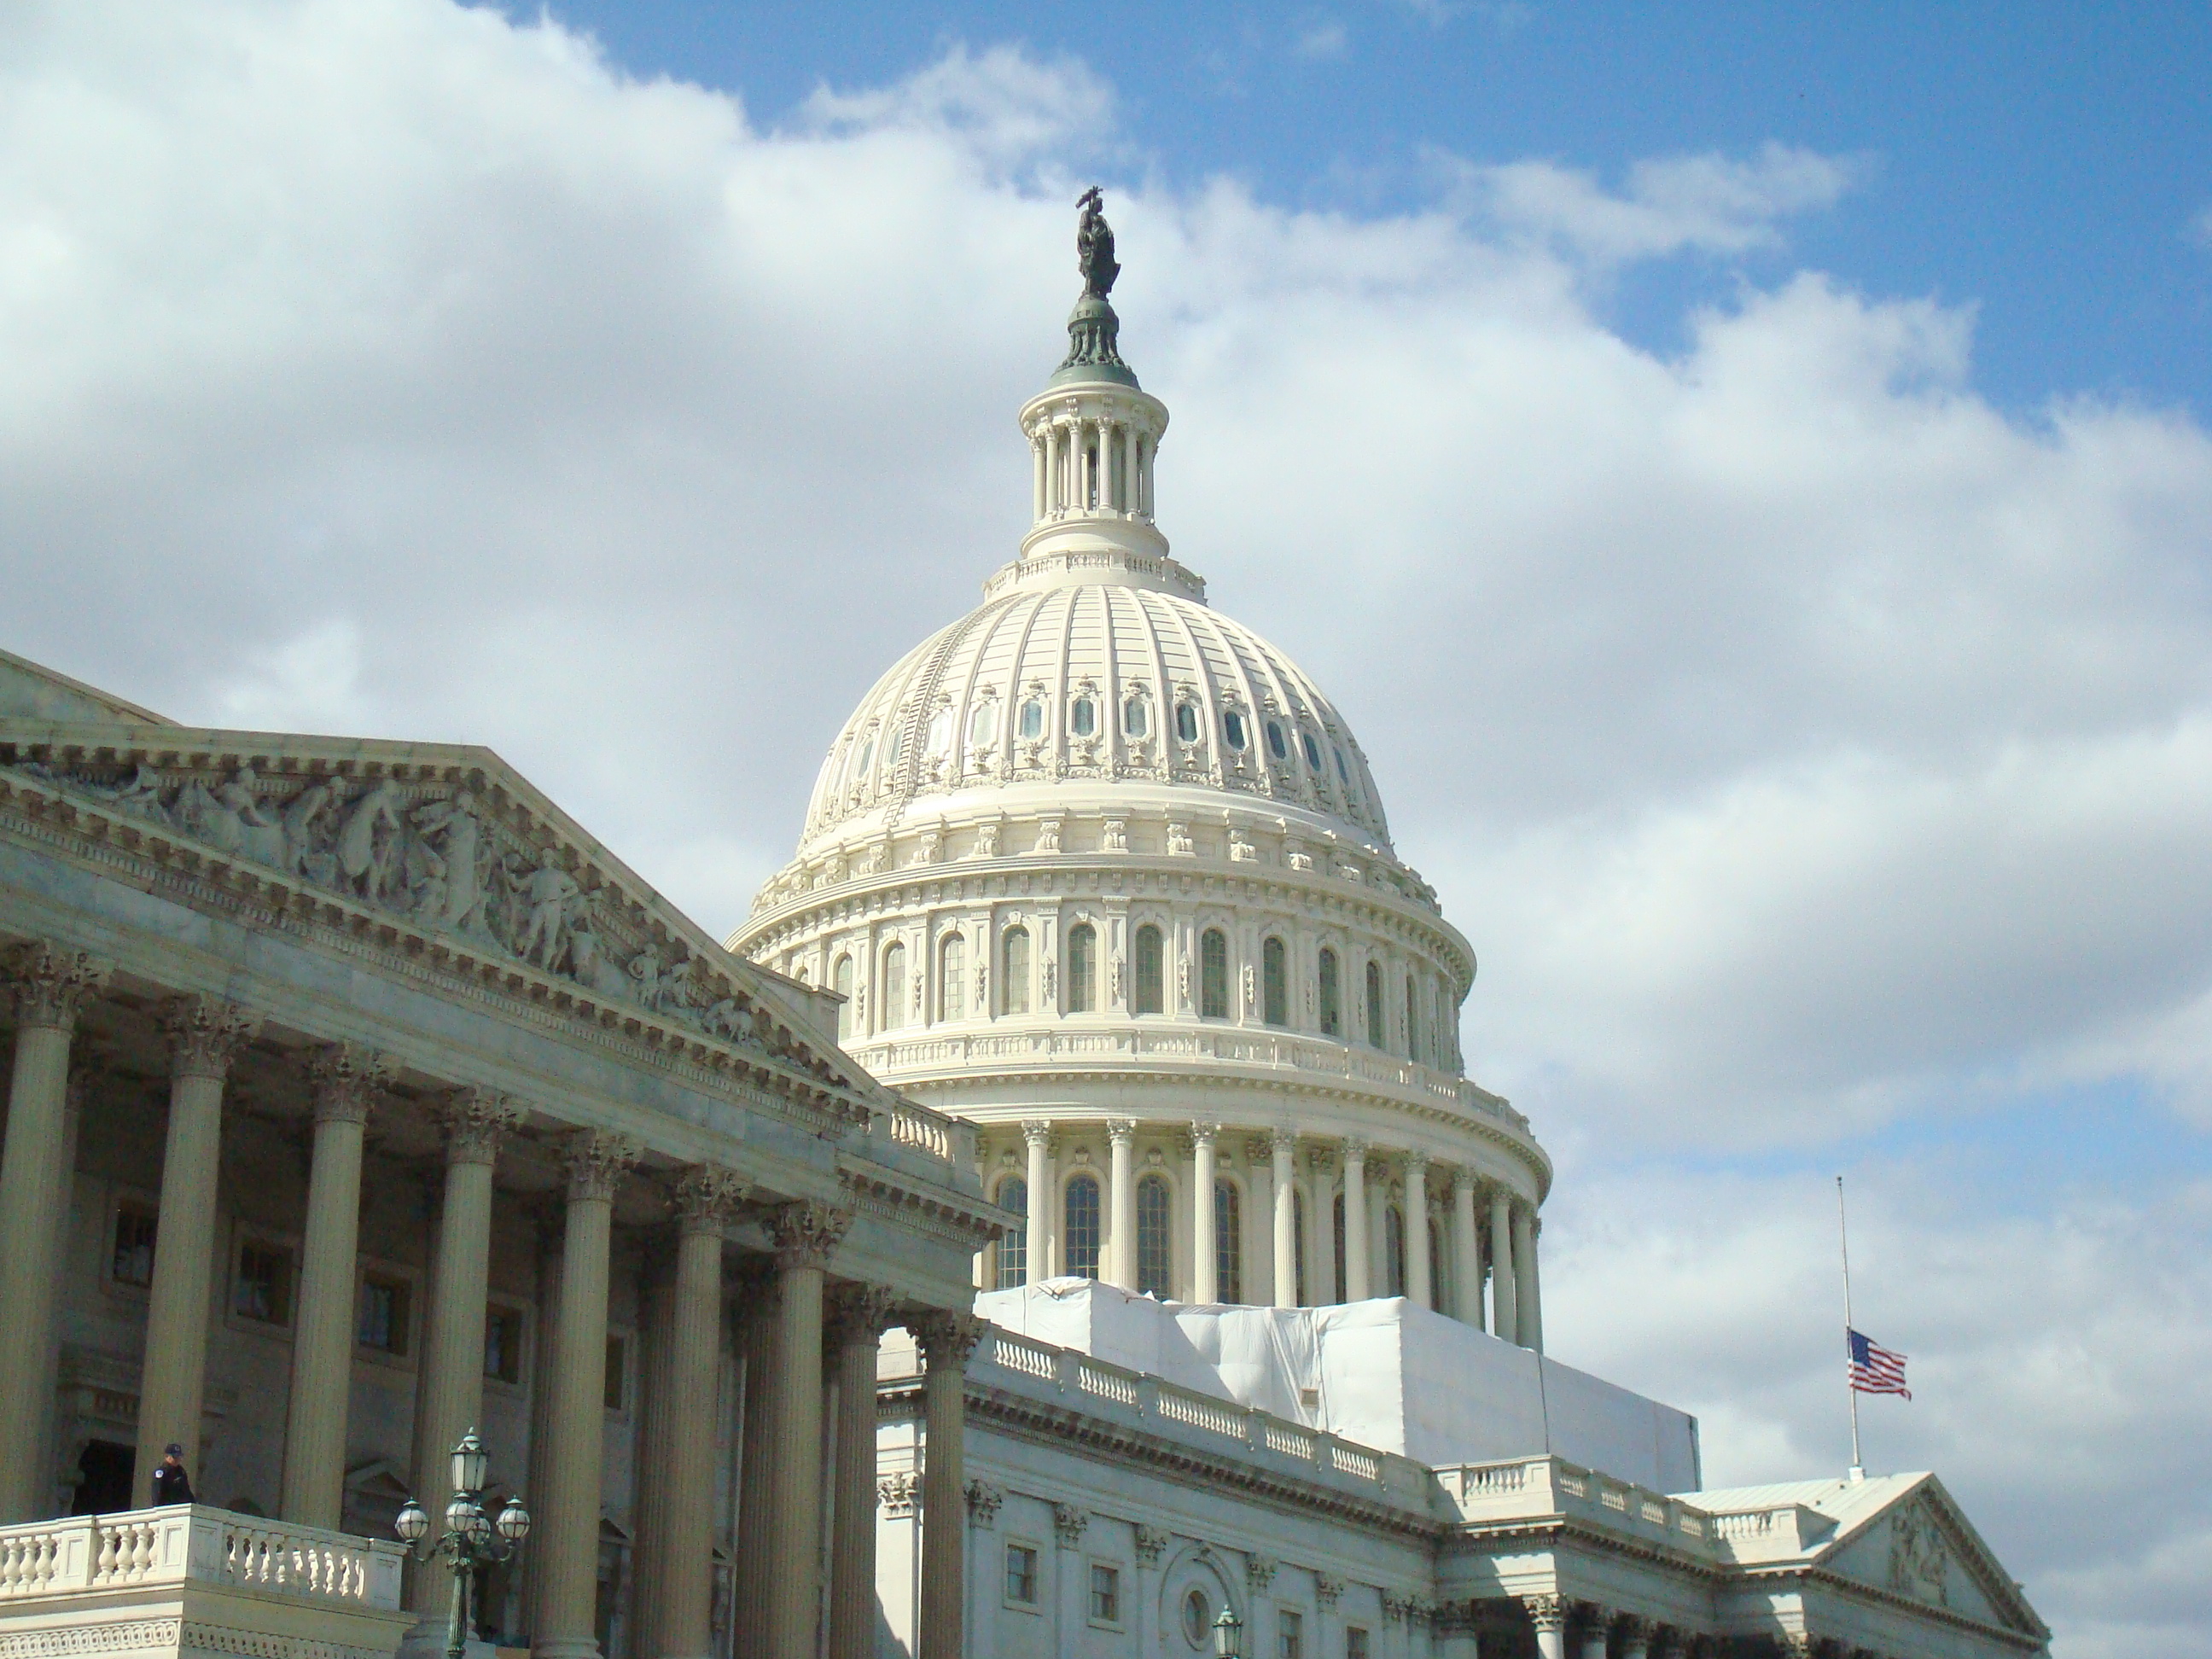 A photo of the rotunda of the U.S. Capitol